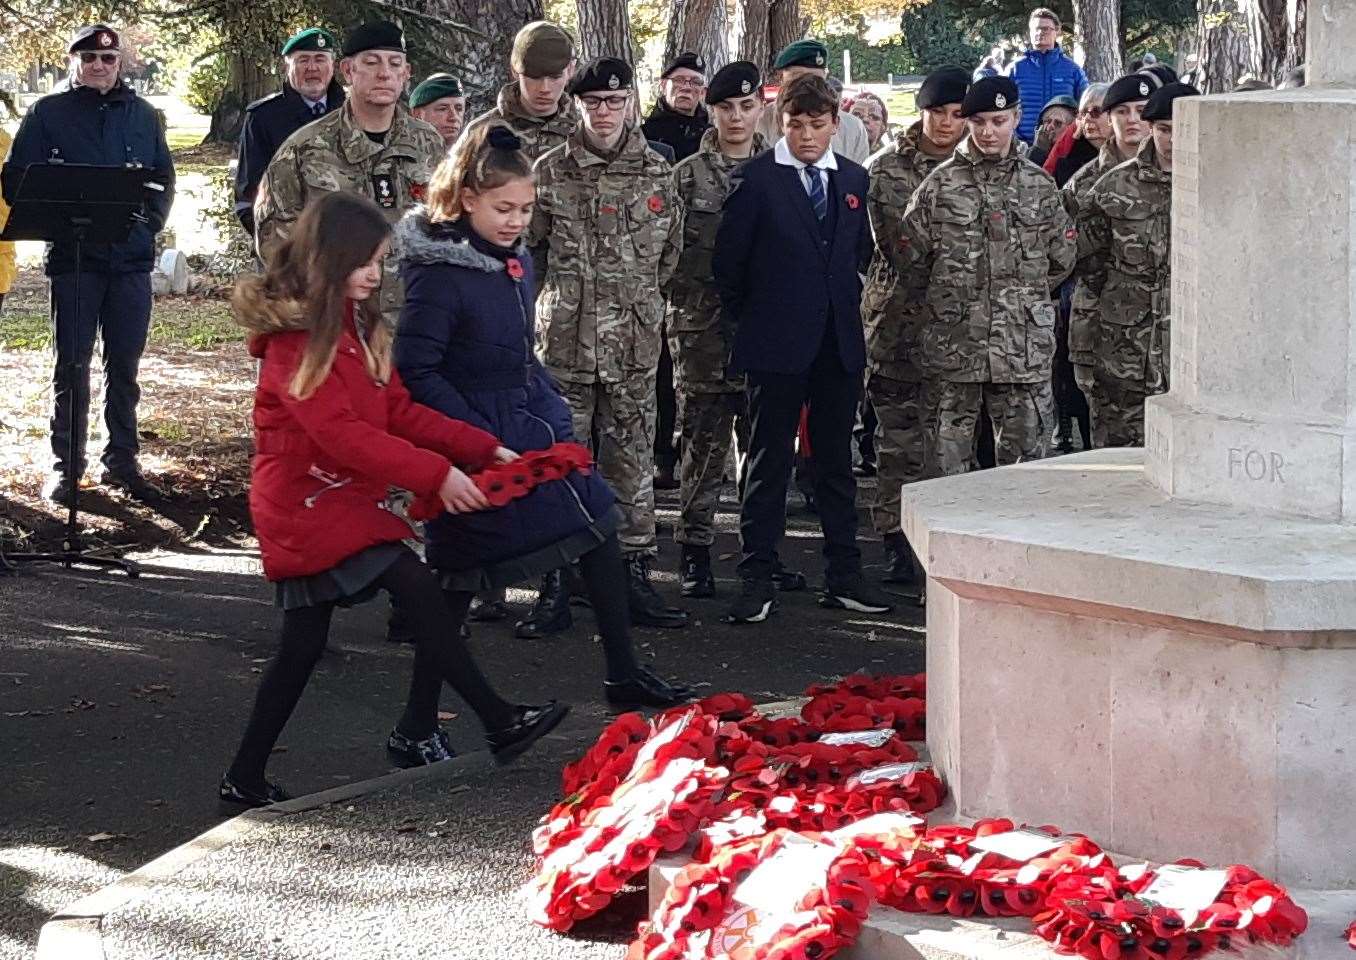 Schoolchildren honouring the war dead with wreaths